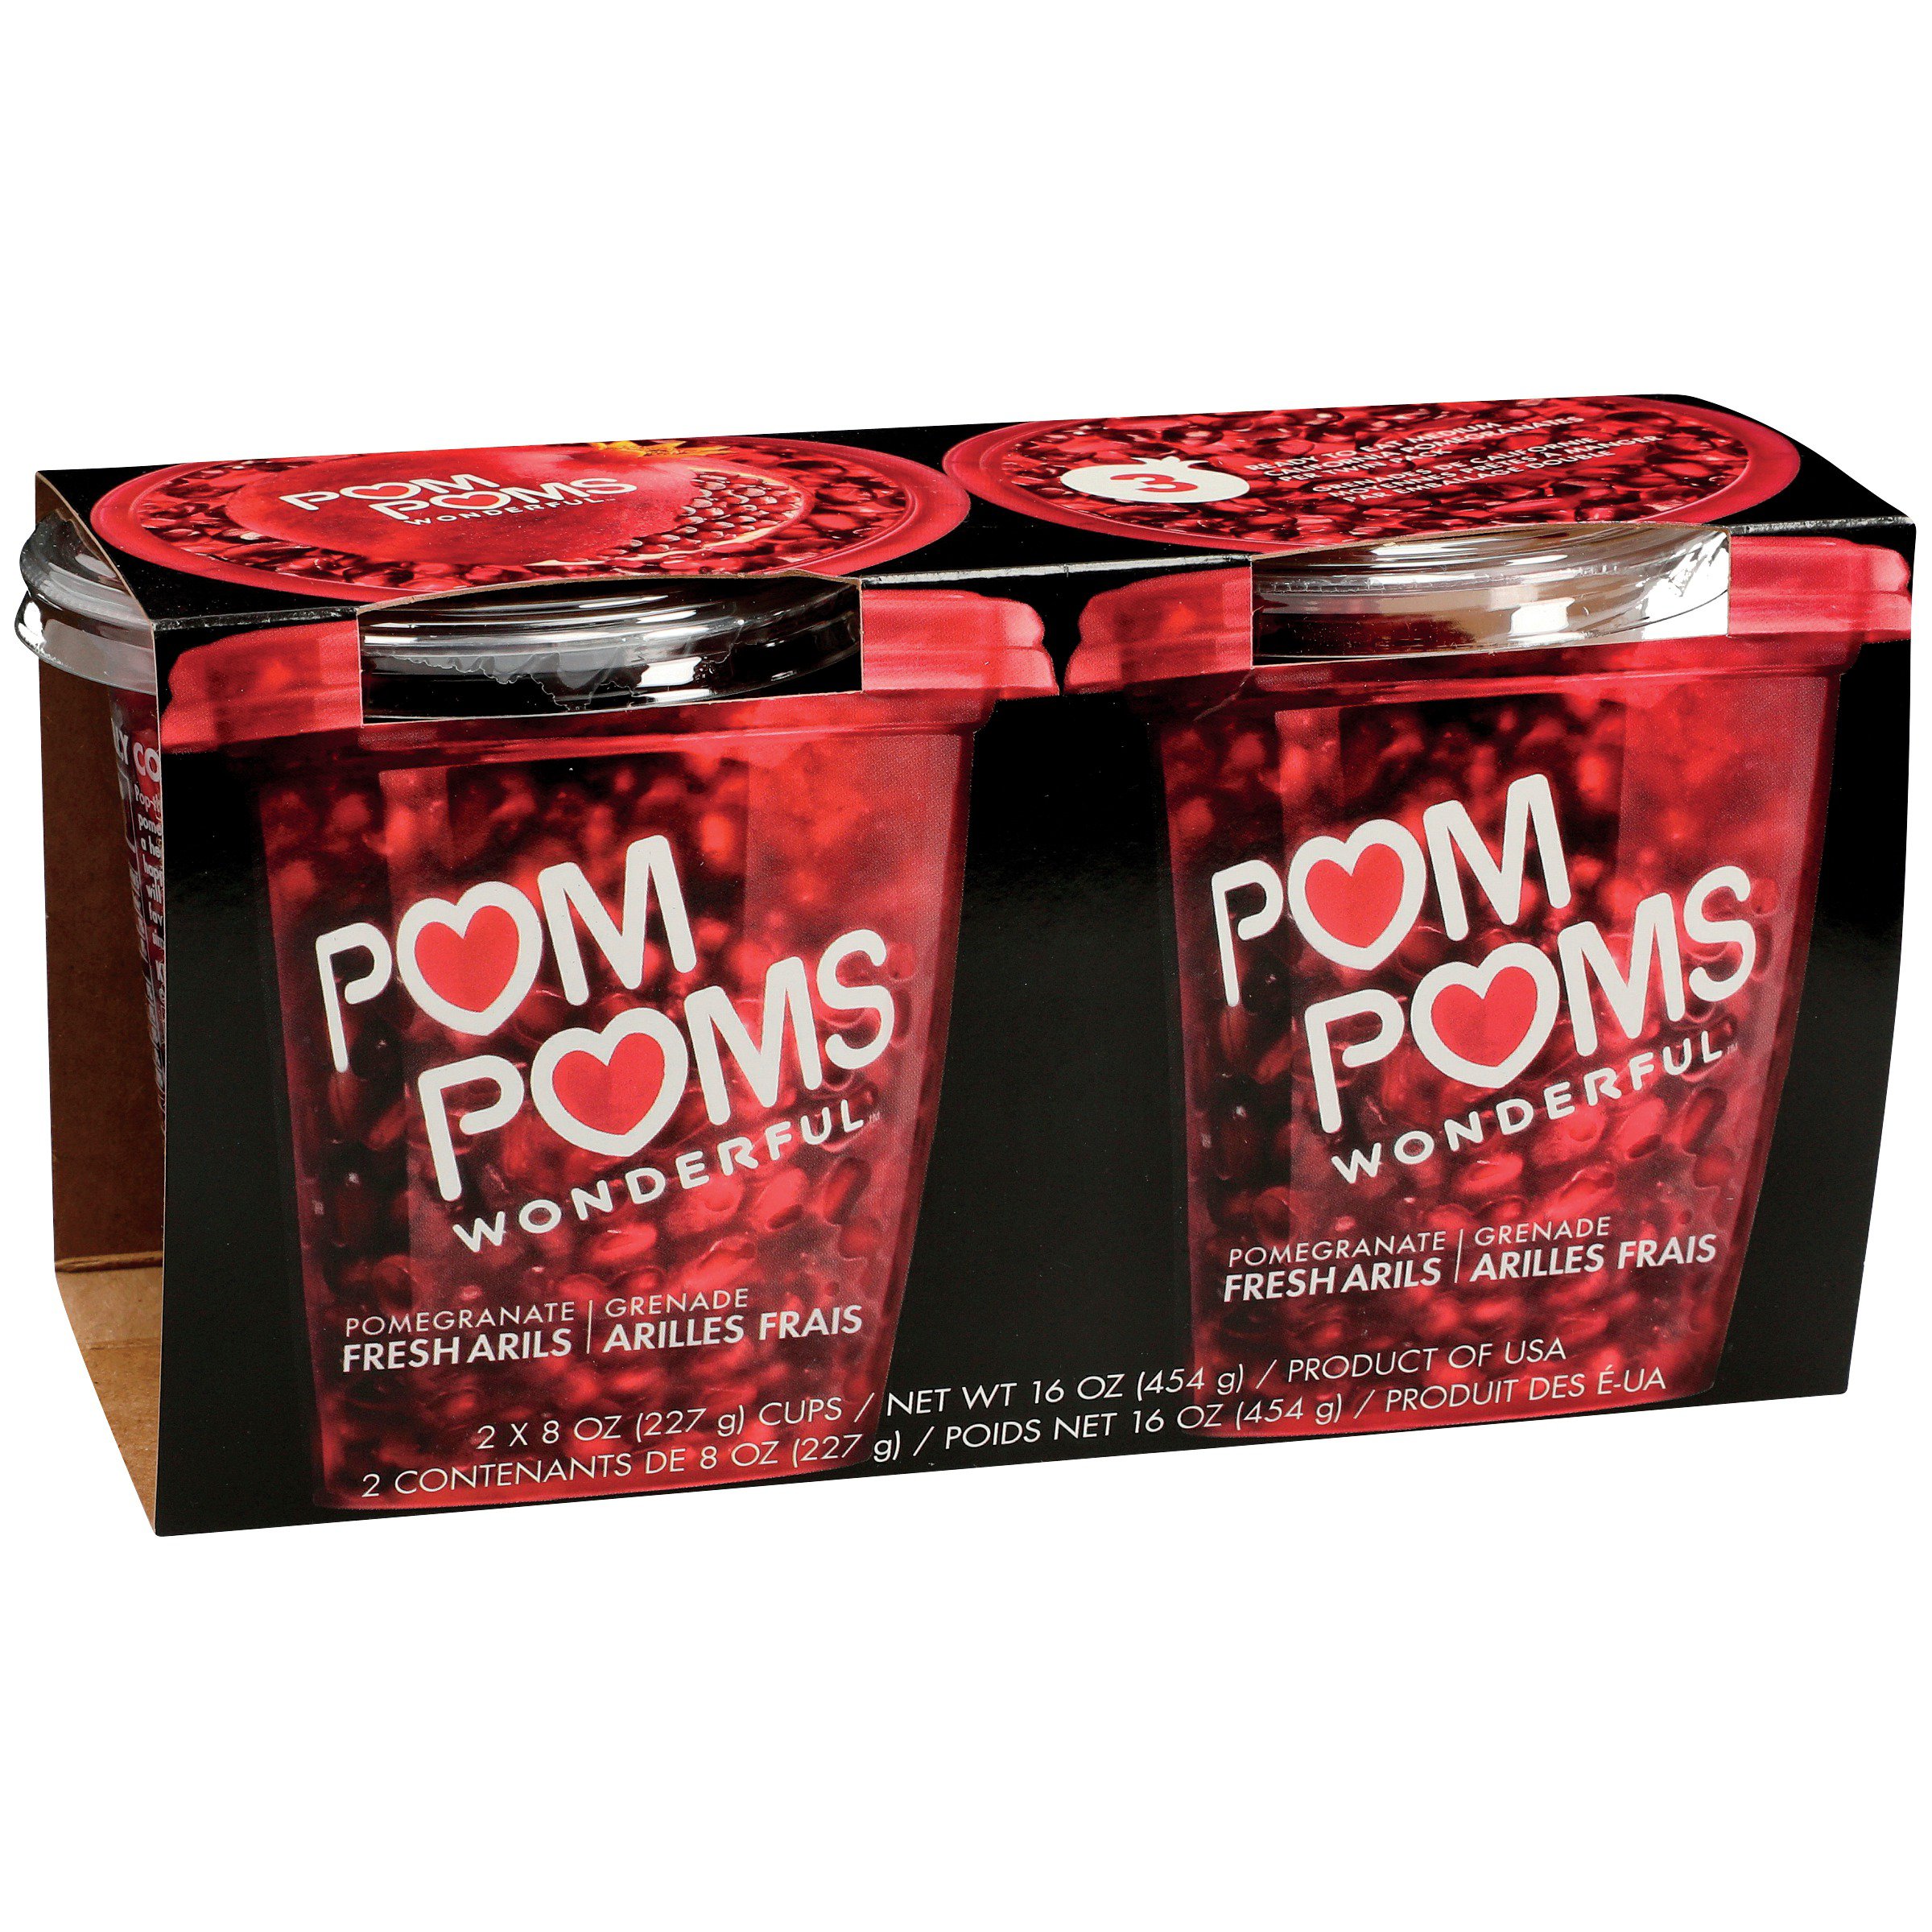 Costco POM Wonderful Pomegranate Juice Review - Costcuisine